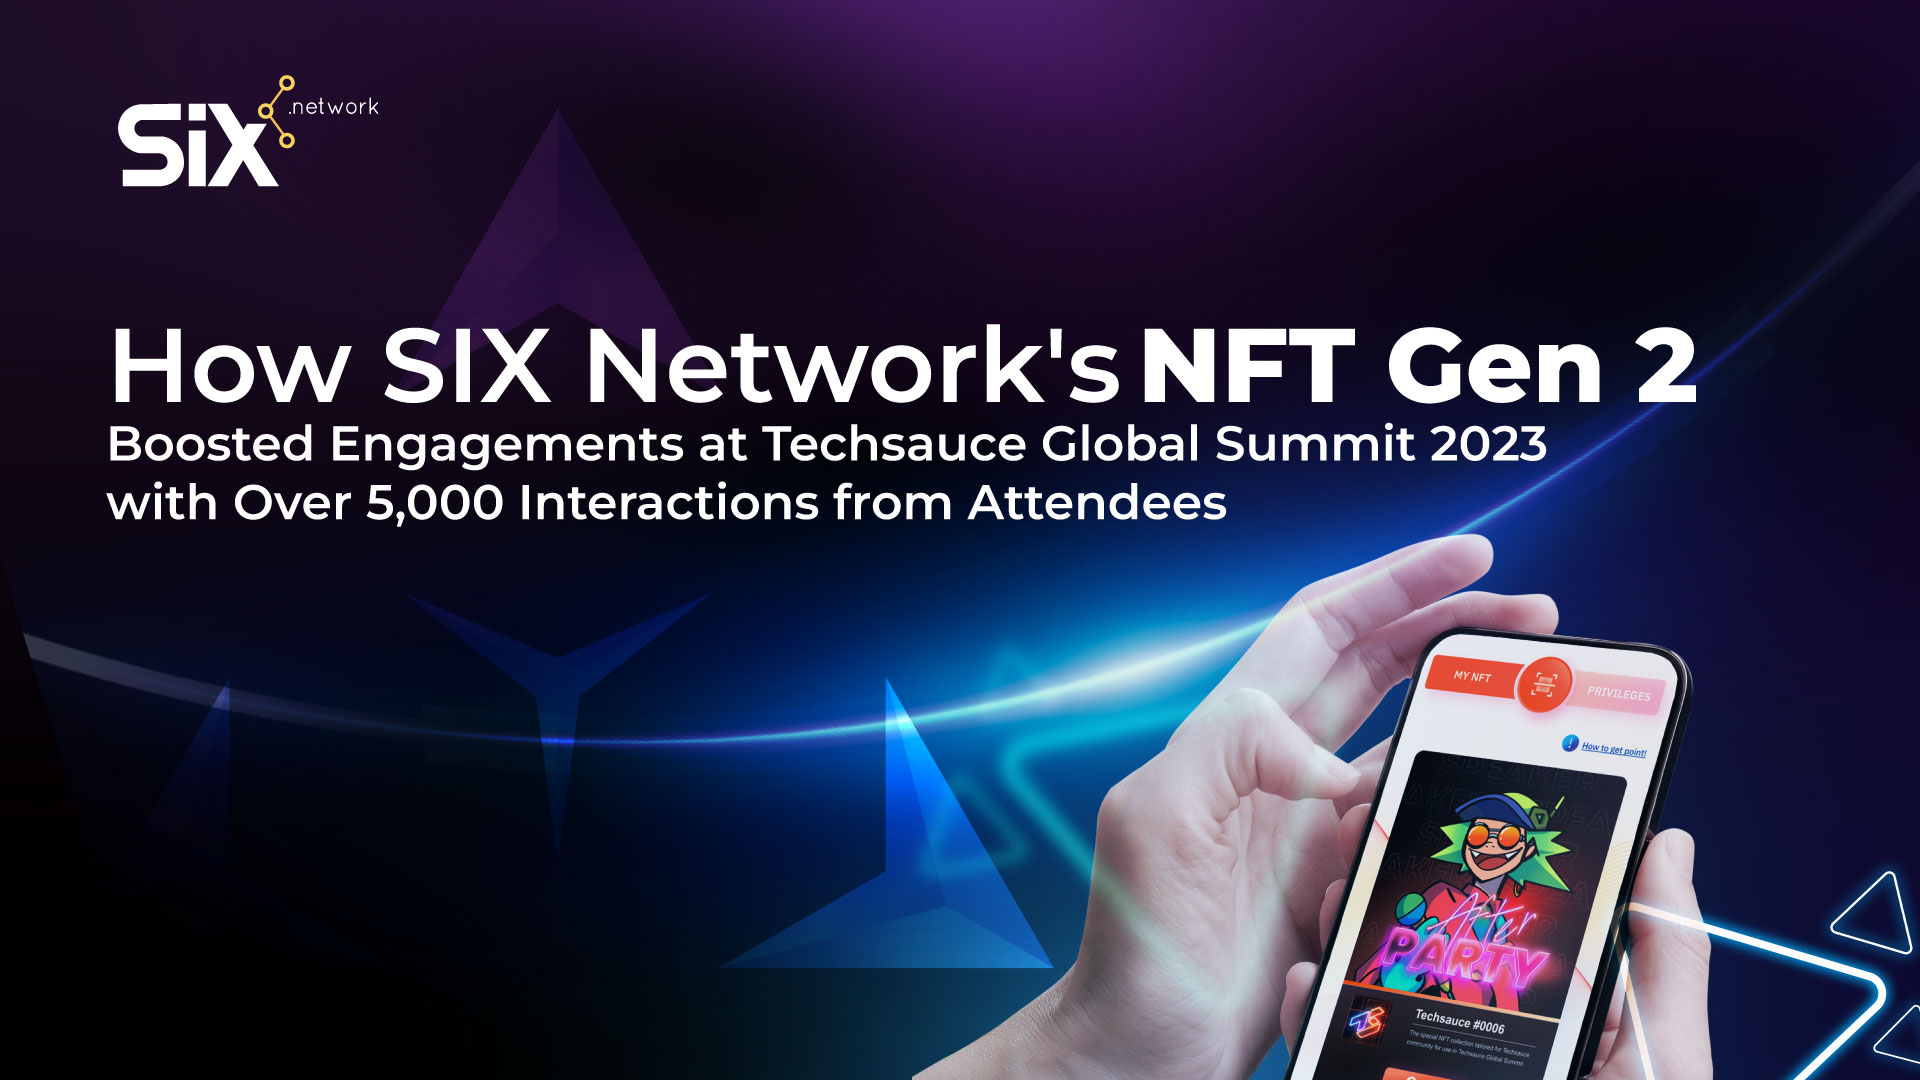 NFT Gen2 ในงาน Techsauce Global Summit 2023 มีการใช้งานที่ทำให้เกิด engagement มากกว่า 5000 ครั้ง